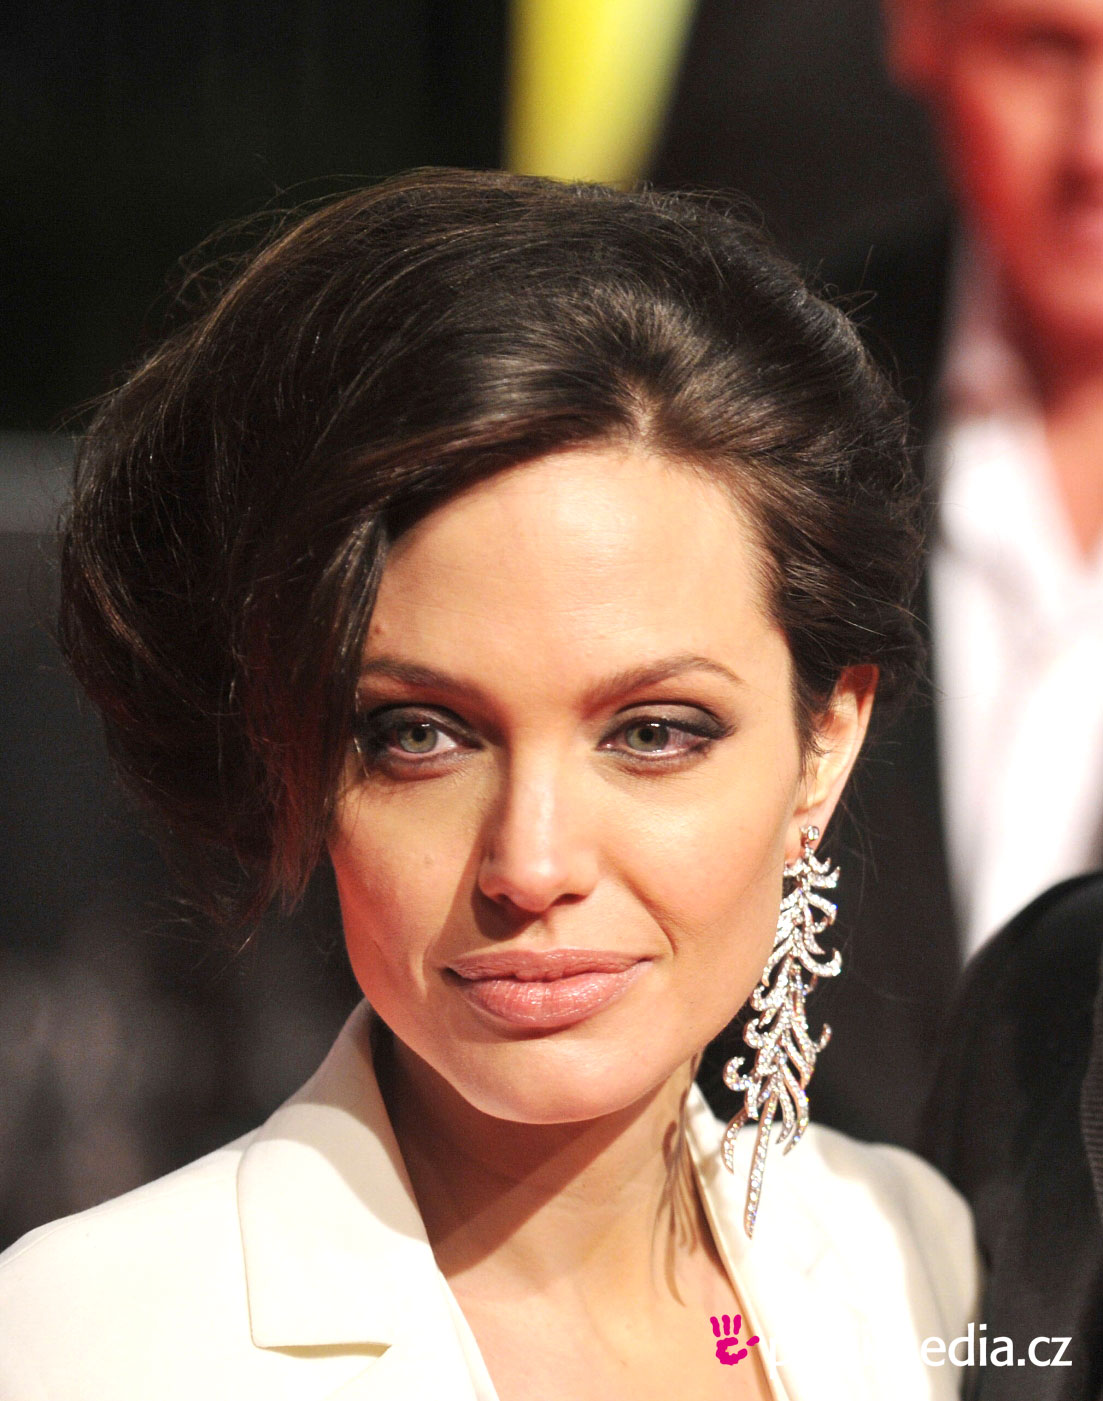 Angelina Jolie Romance Romance Hairstyles, Long Hairstyle 2013, Hairstyle 2013, New Long Hairstyle 2013, Celebrity Long Romance Romance Hairstyles 2033